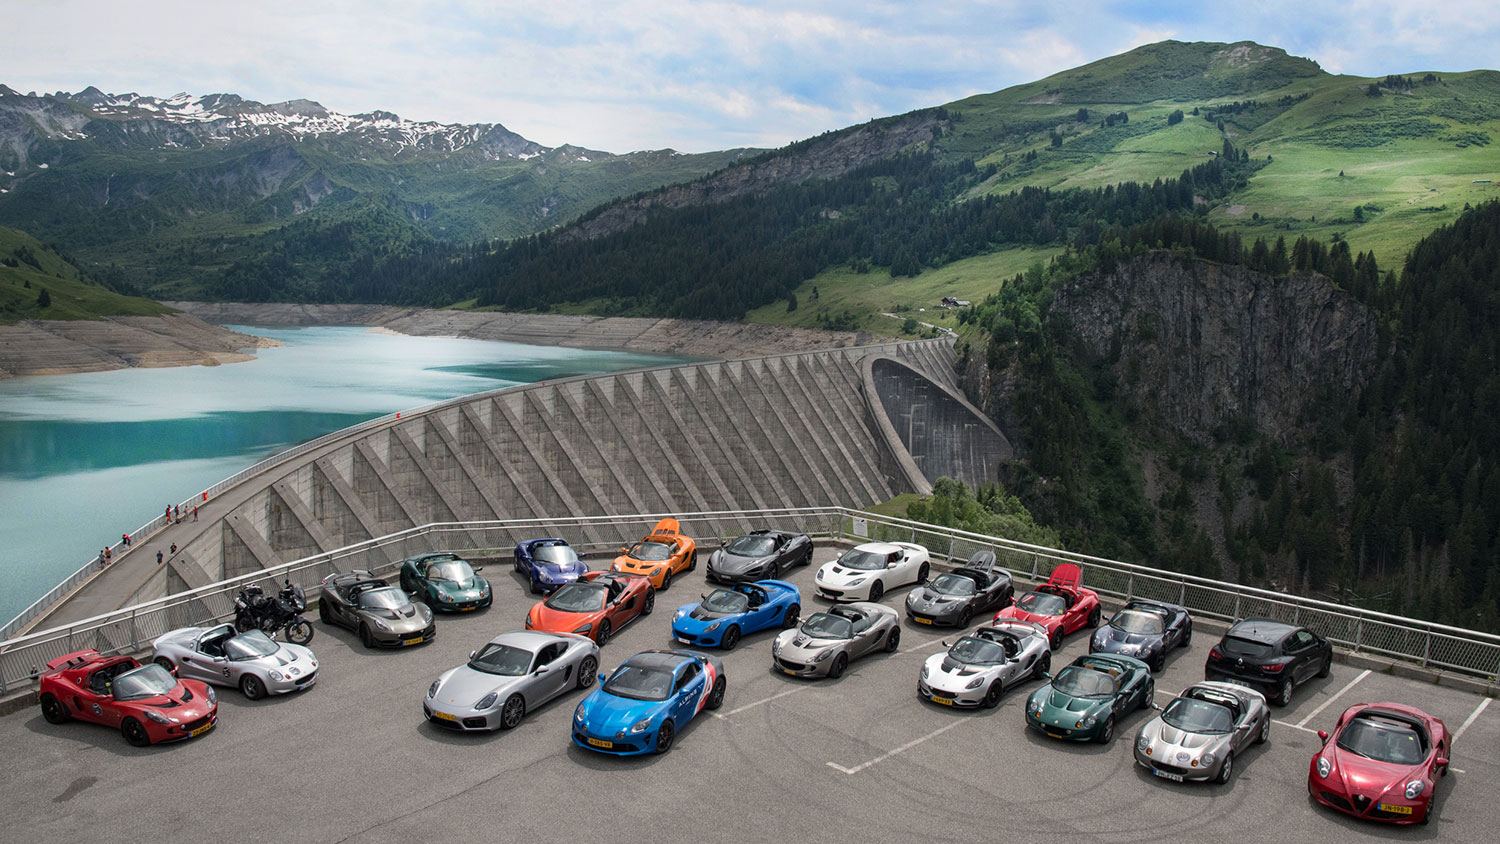 Tour des Grandes Alpes cars lined up